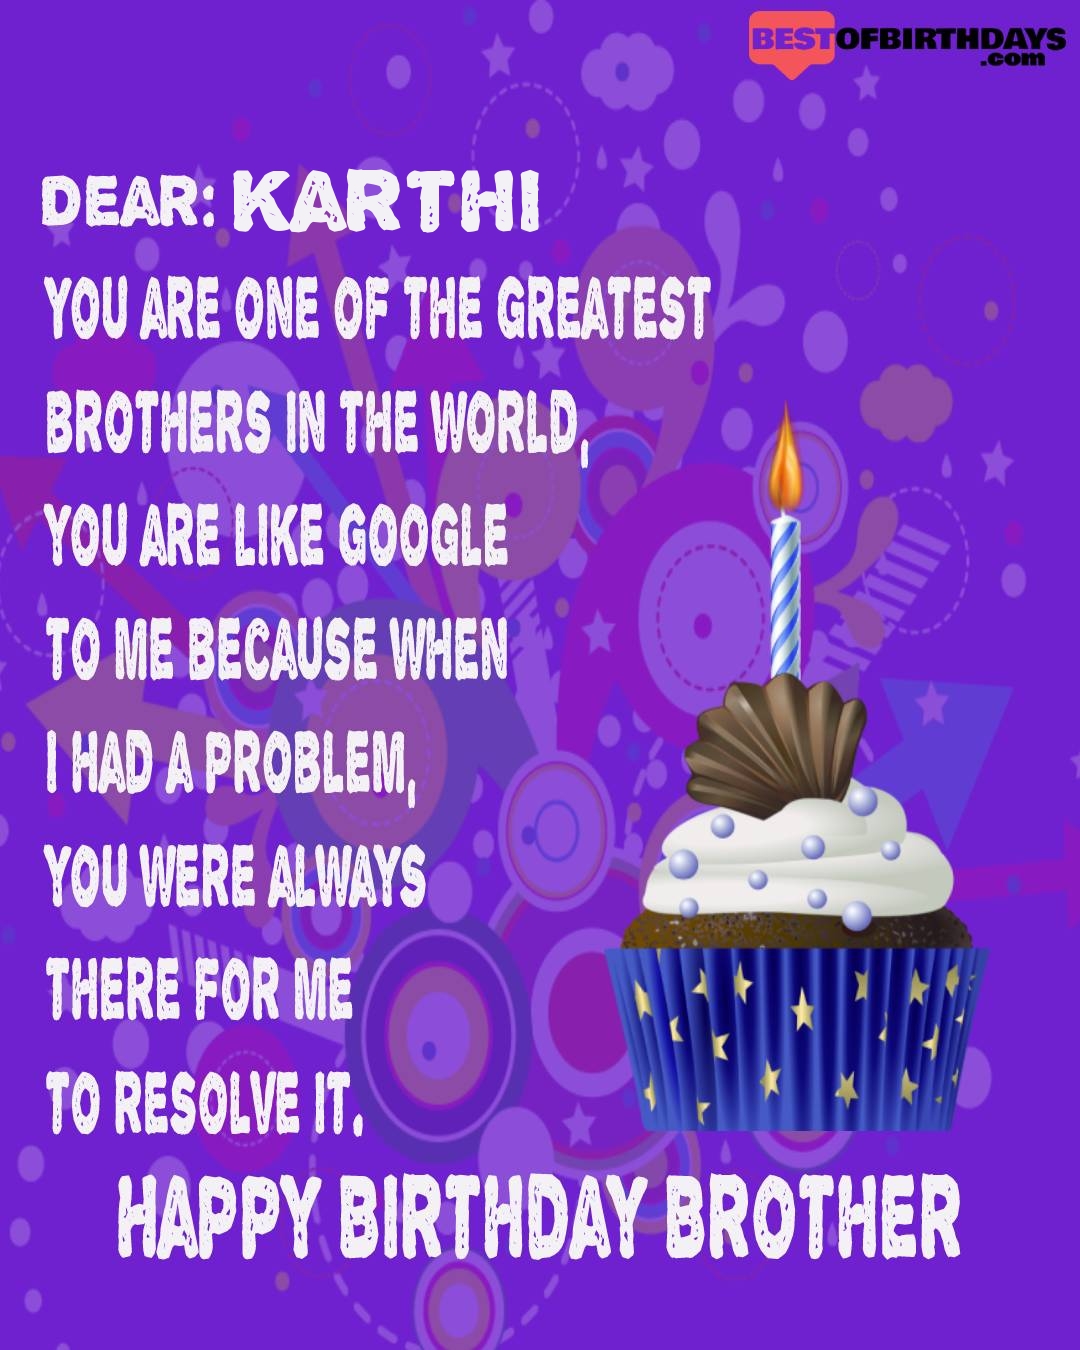 Happy birthday karthi bhai brother bro